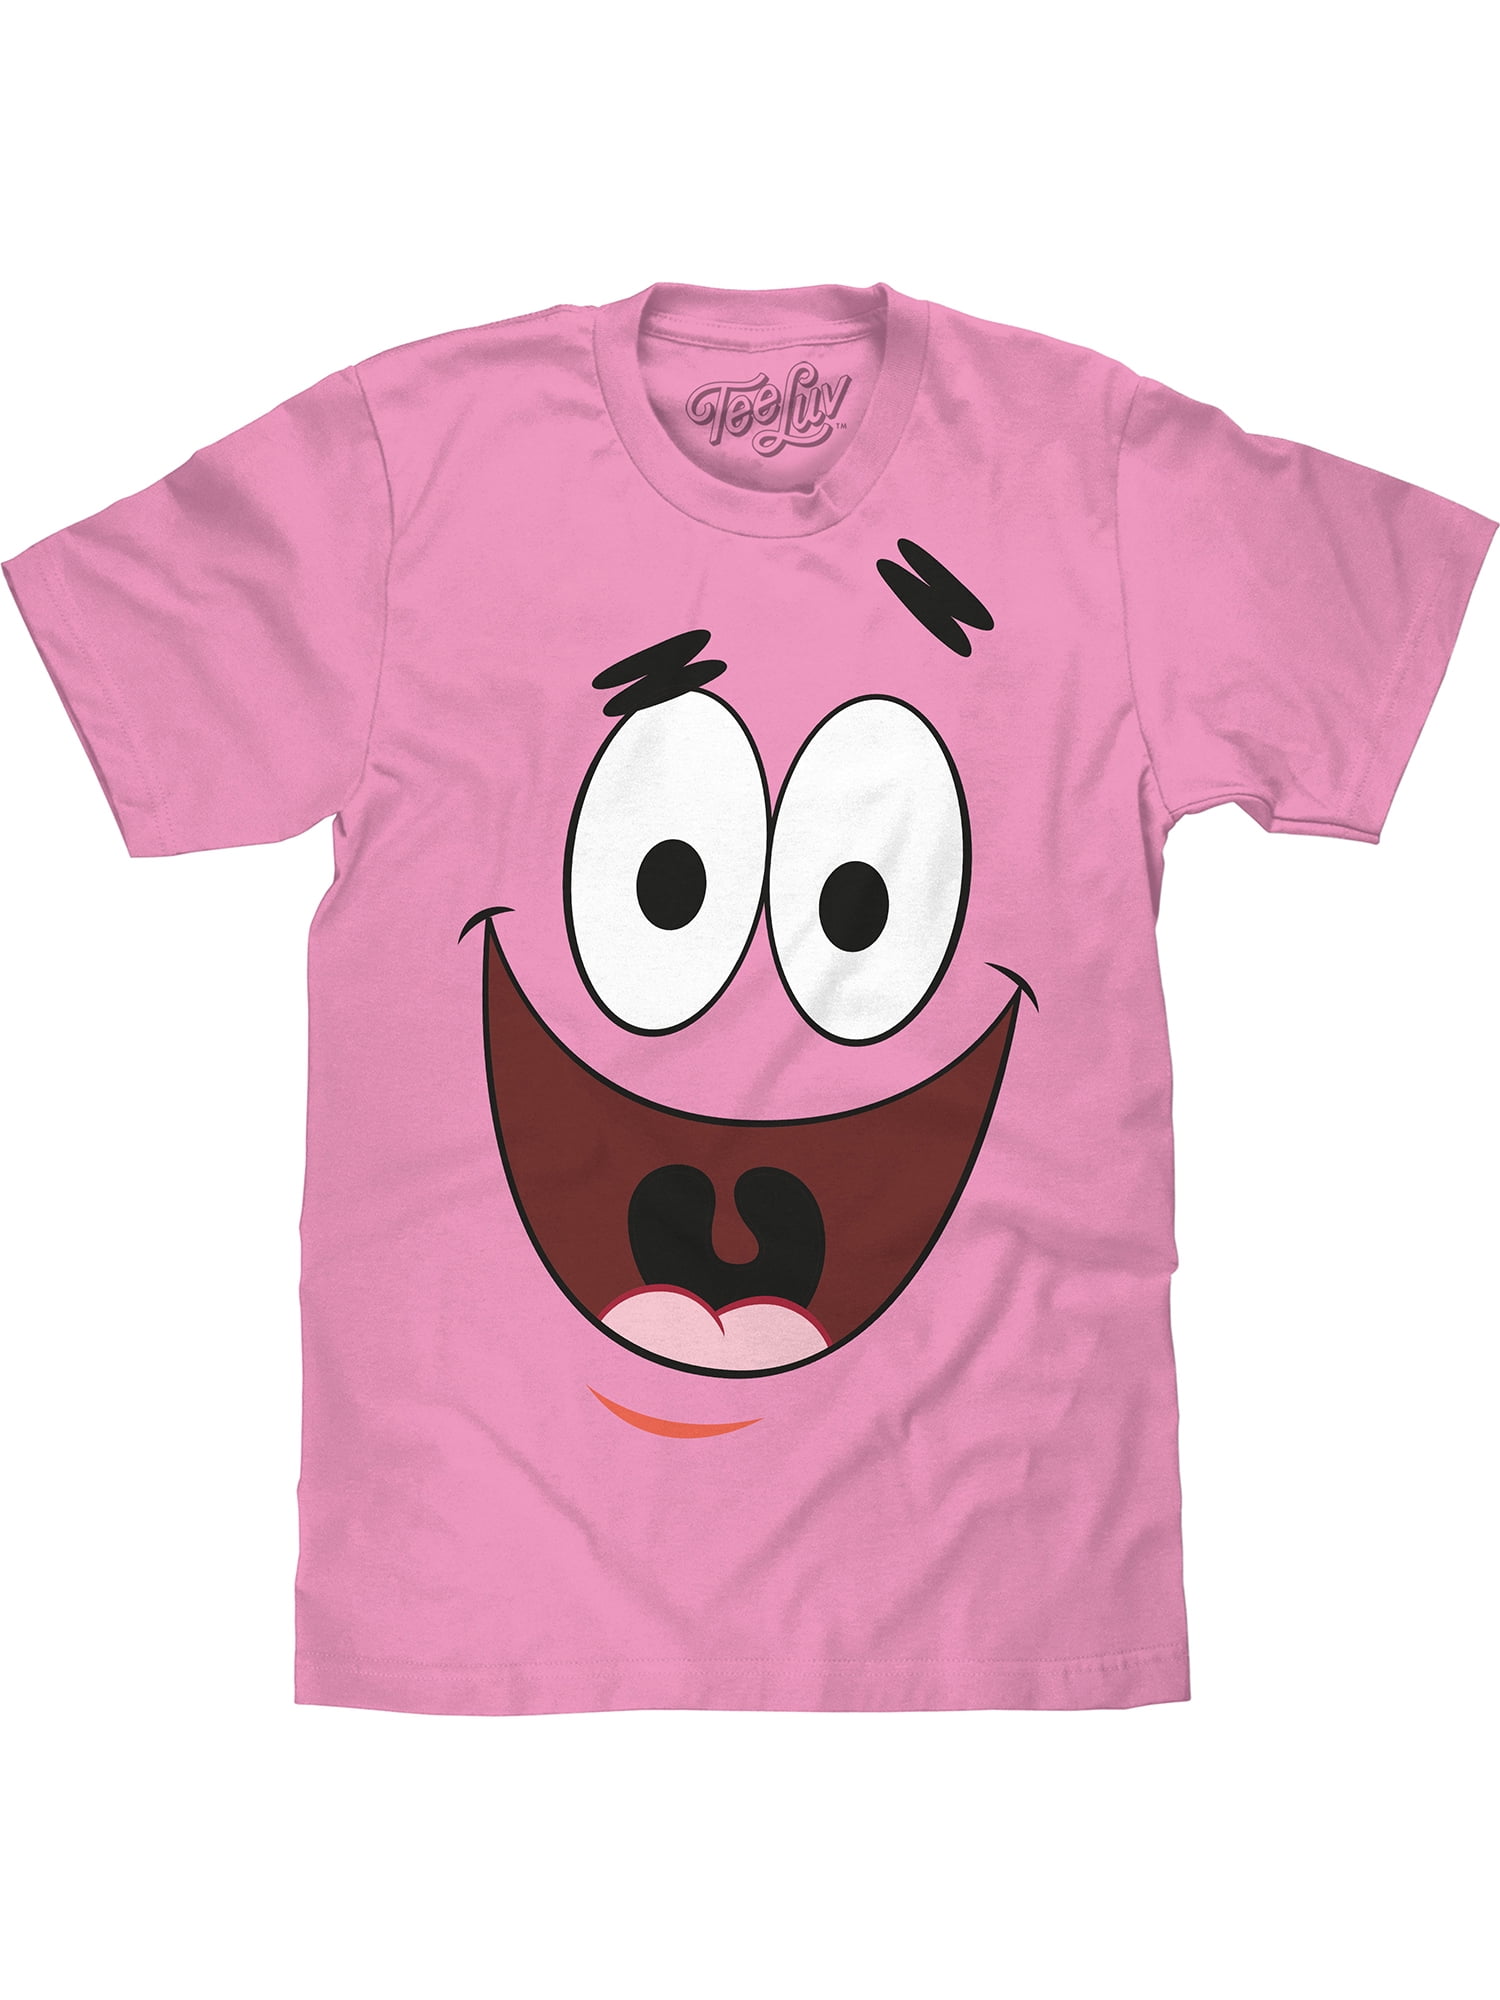 Tee Luv Men's Patrick Star Cartoon Character Face Shirt (XXL)